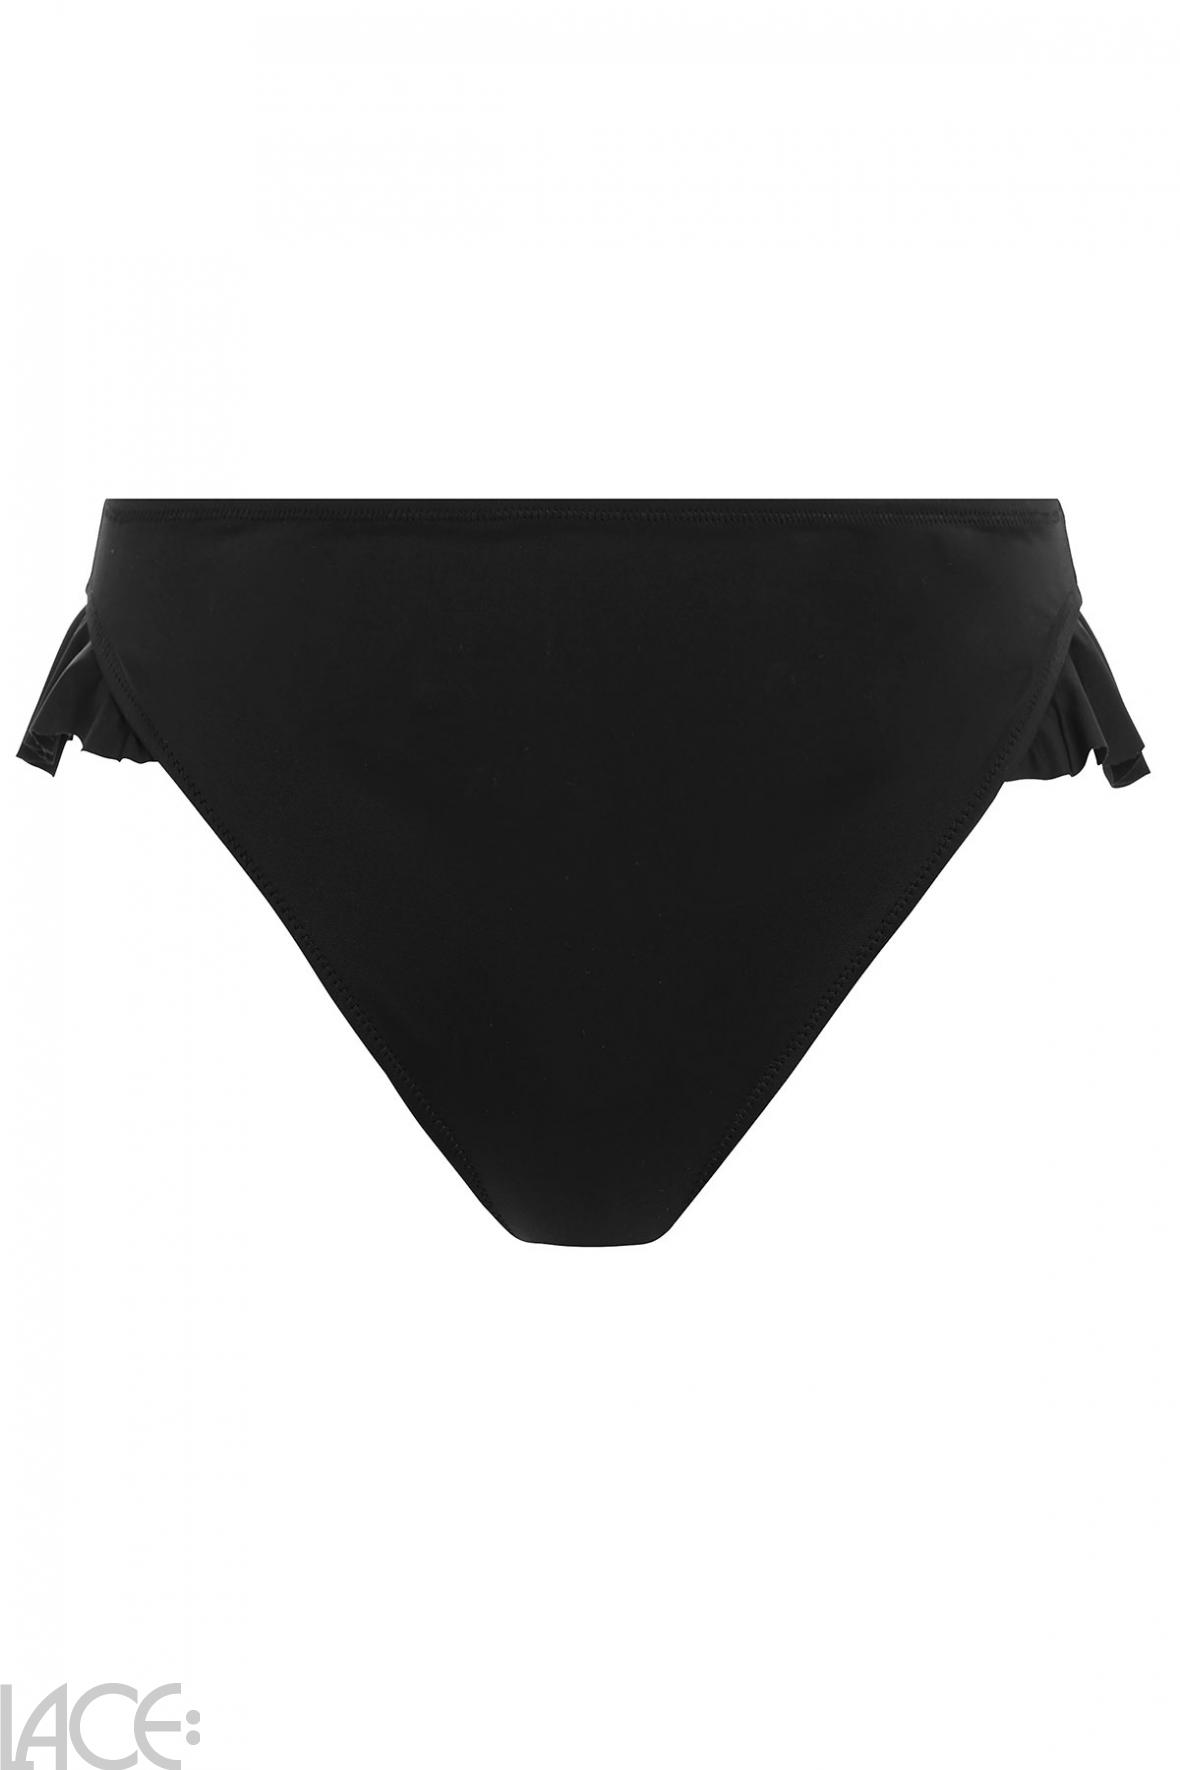 Elomi Plain Sailing Bikini Classic brief BLACK – Lace-Lingerie.com